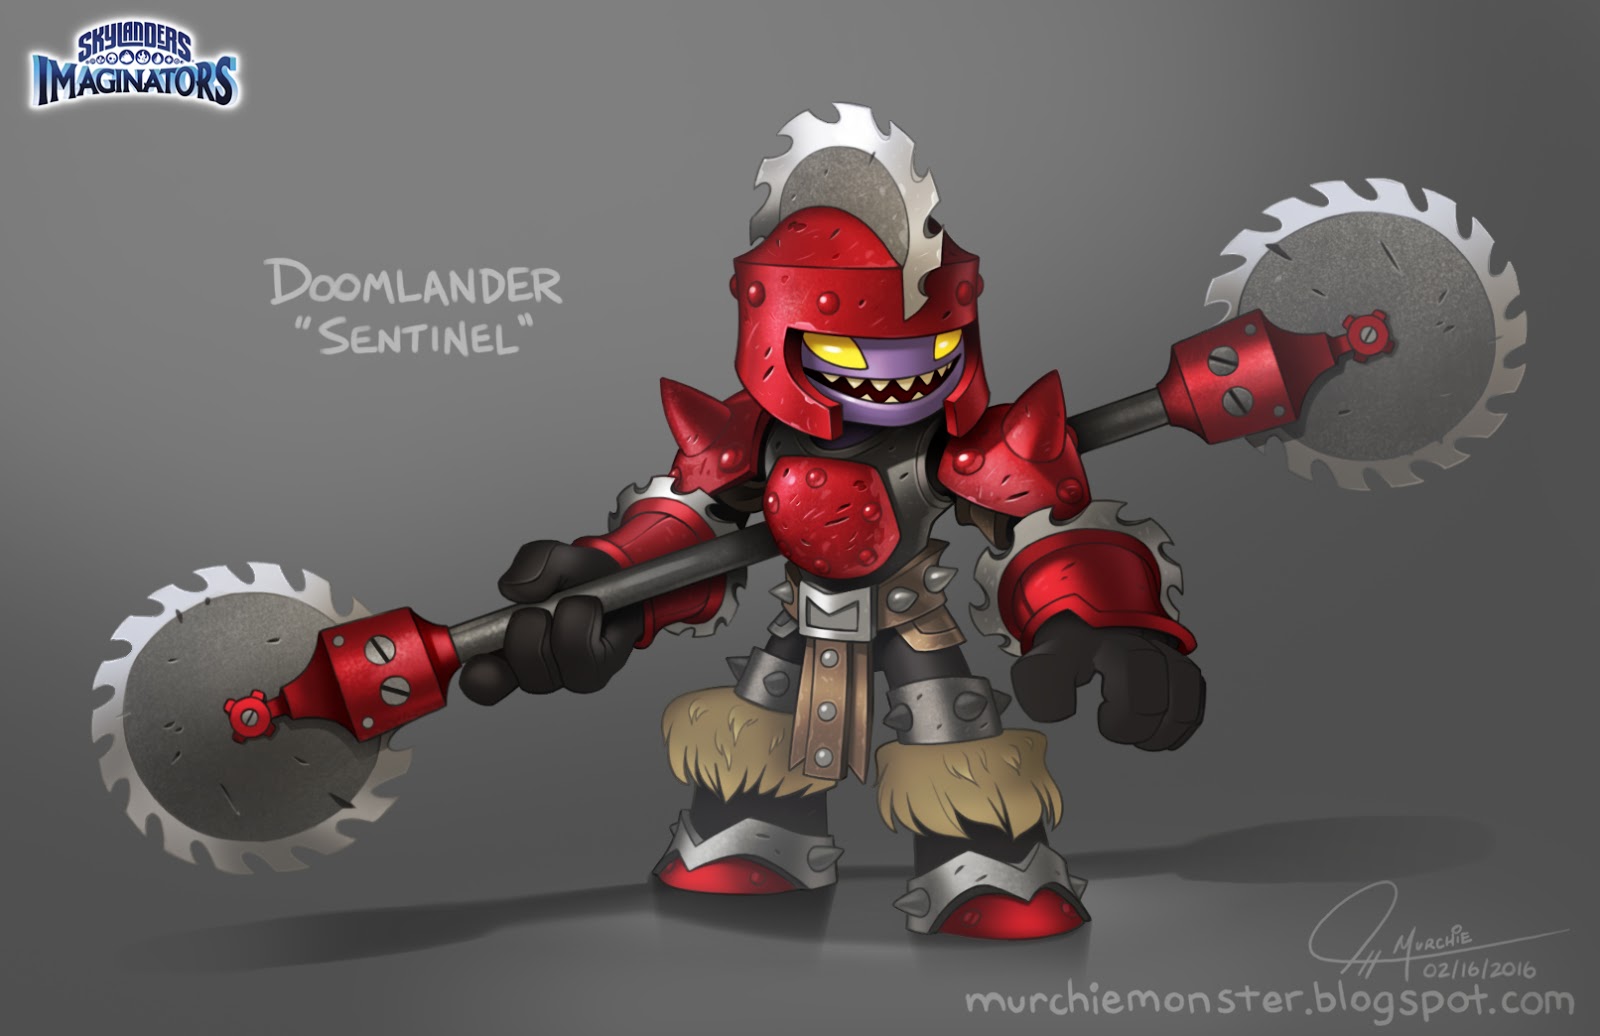 Doomlander "Sentinel" Concept for Skylanders Imaginators.